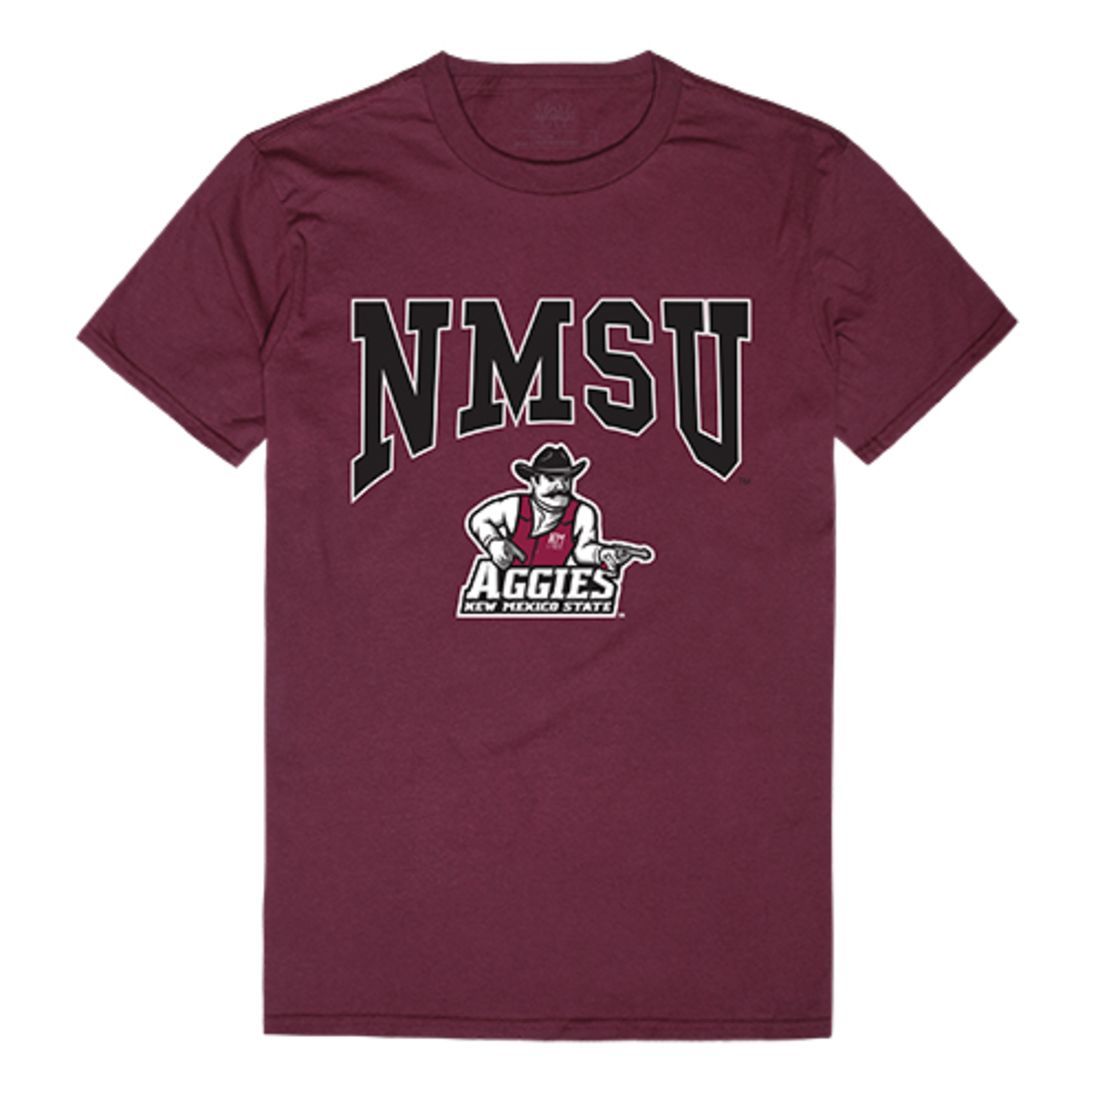 NMSU New Mexico State University Aggies Athletic T-Shirt Maroon-Campus-Wardrobe